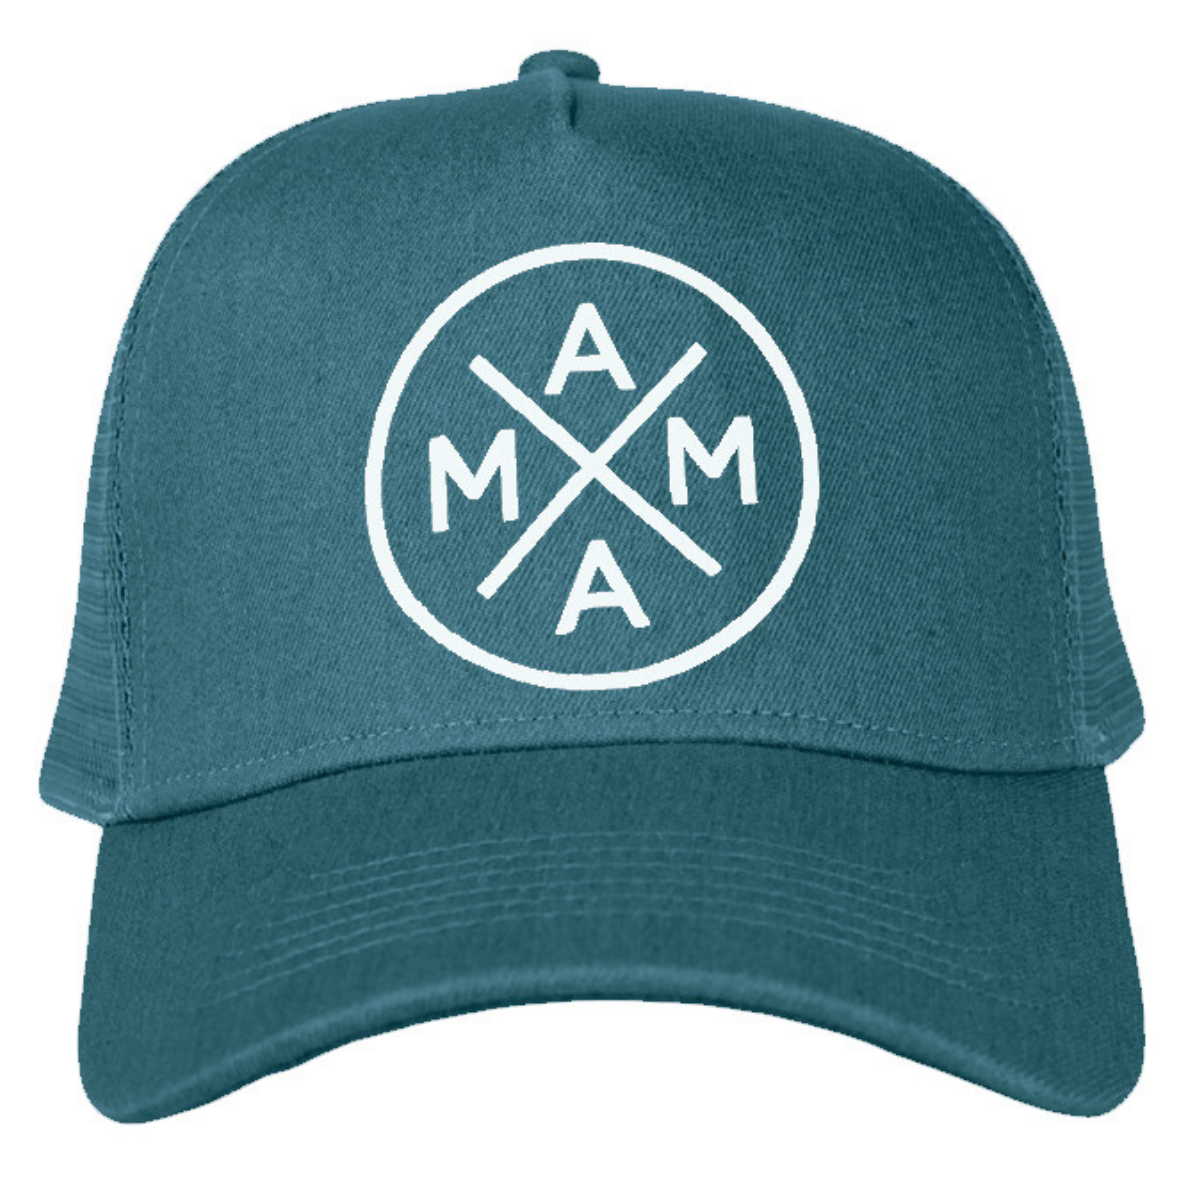 Mama Trucker Hat - Teal